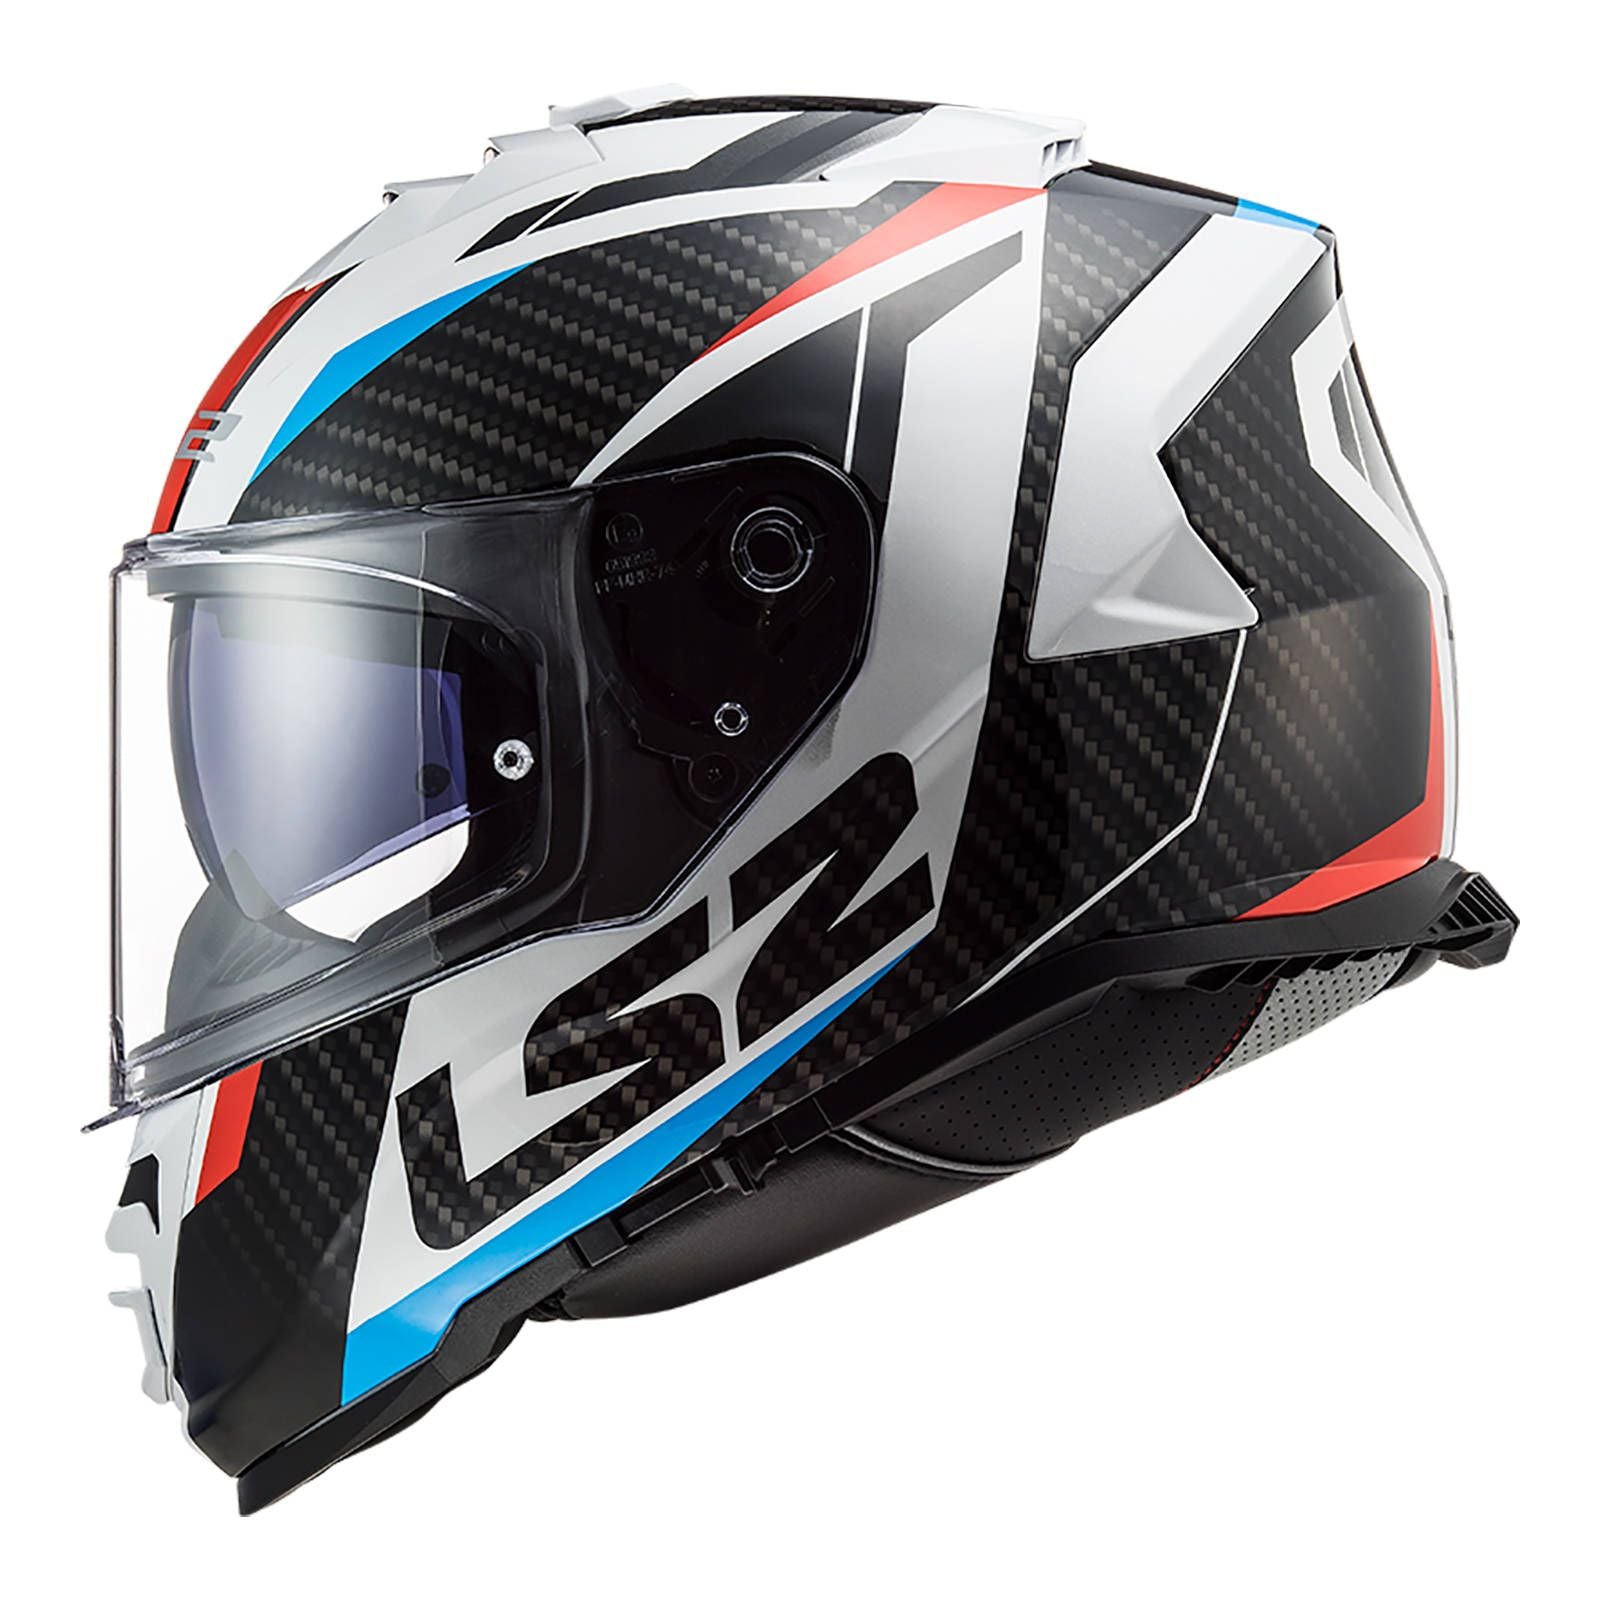 New LS2 FF800 Storm Racer Helmet - White / Blue / Red (XL) #LS2FF800RACWBRXL